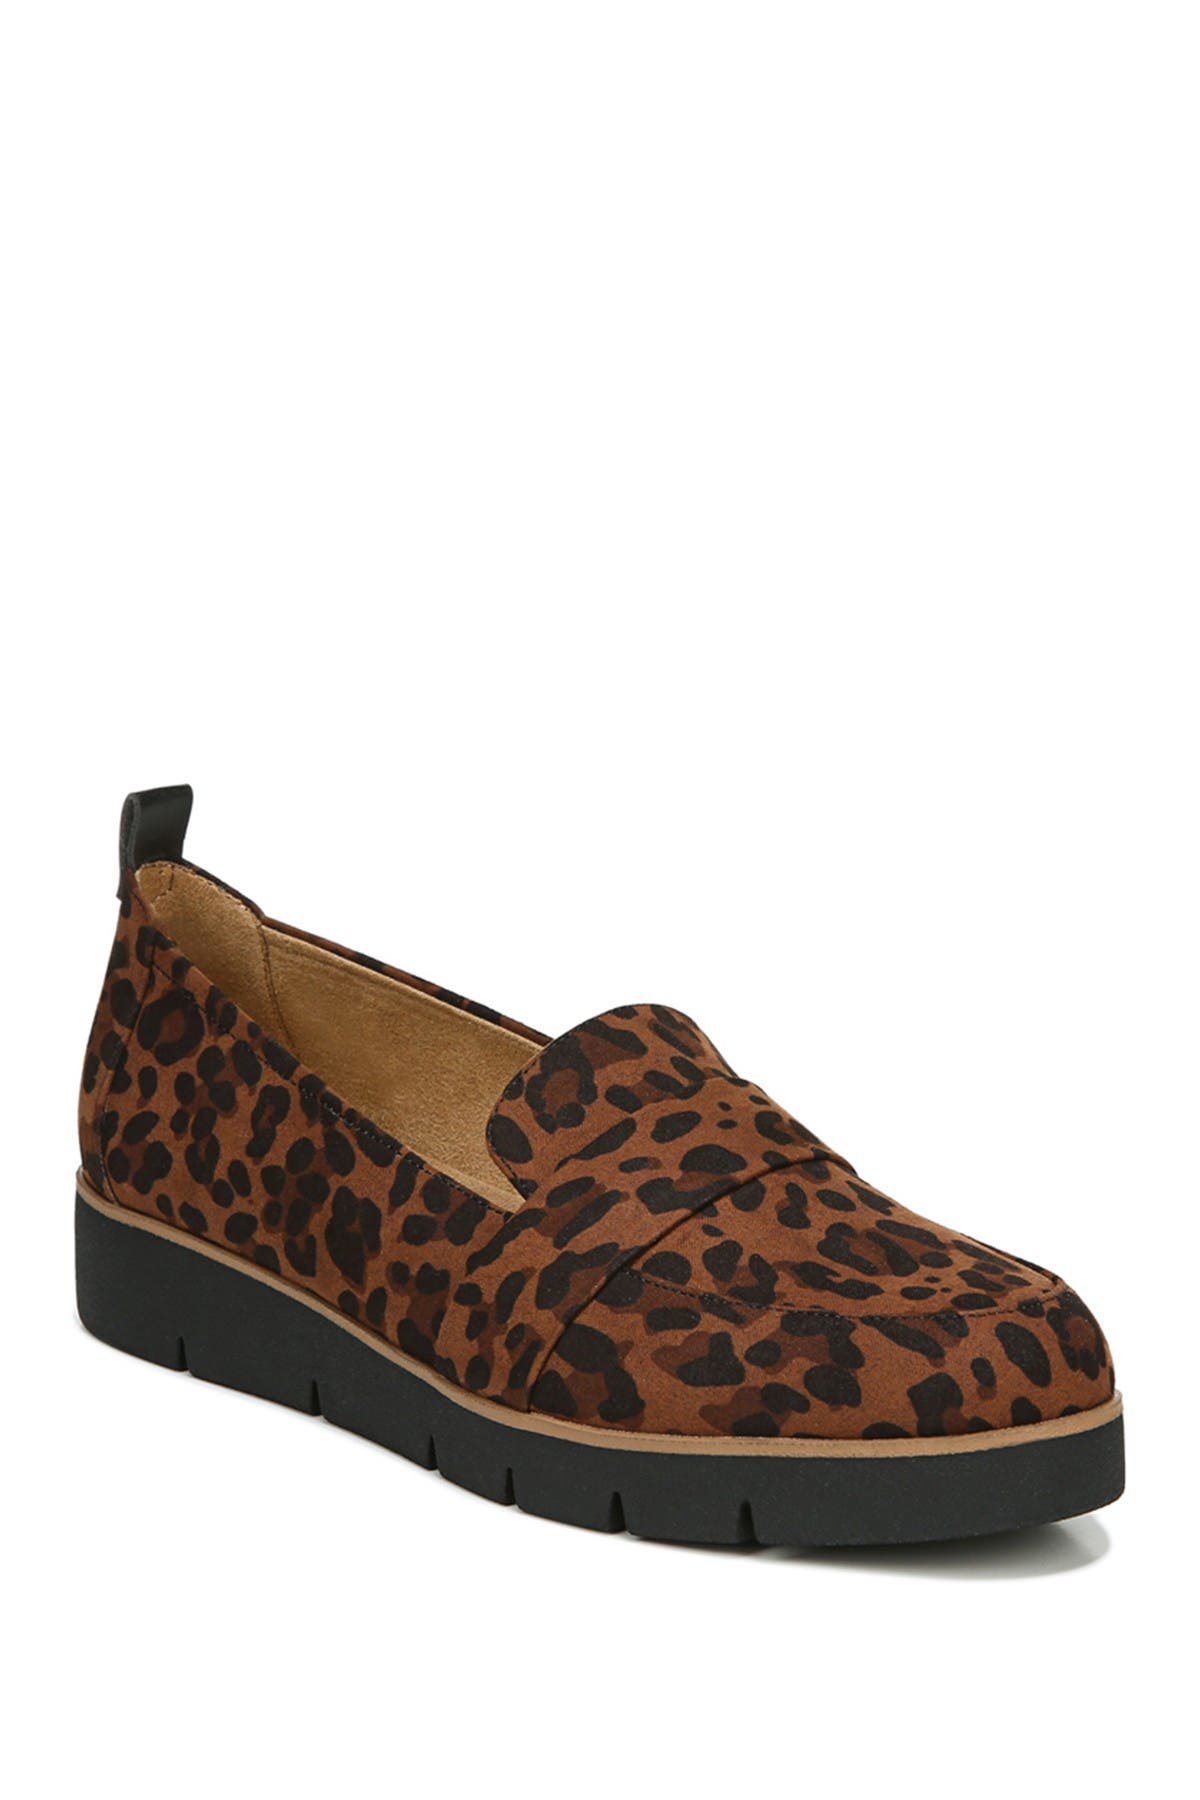 leopard print leather shoes